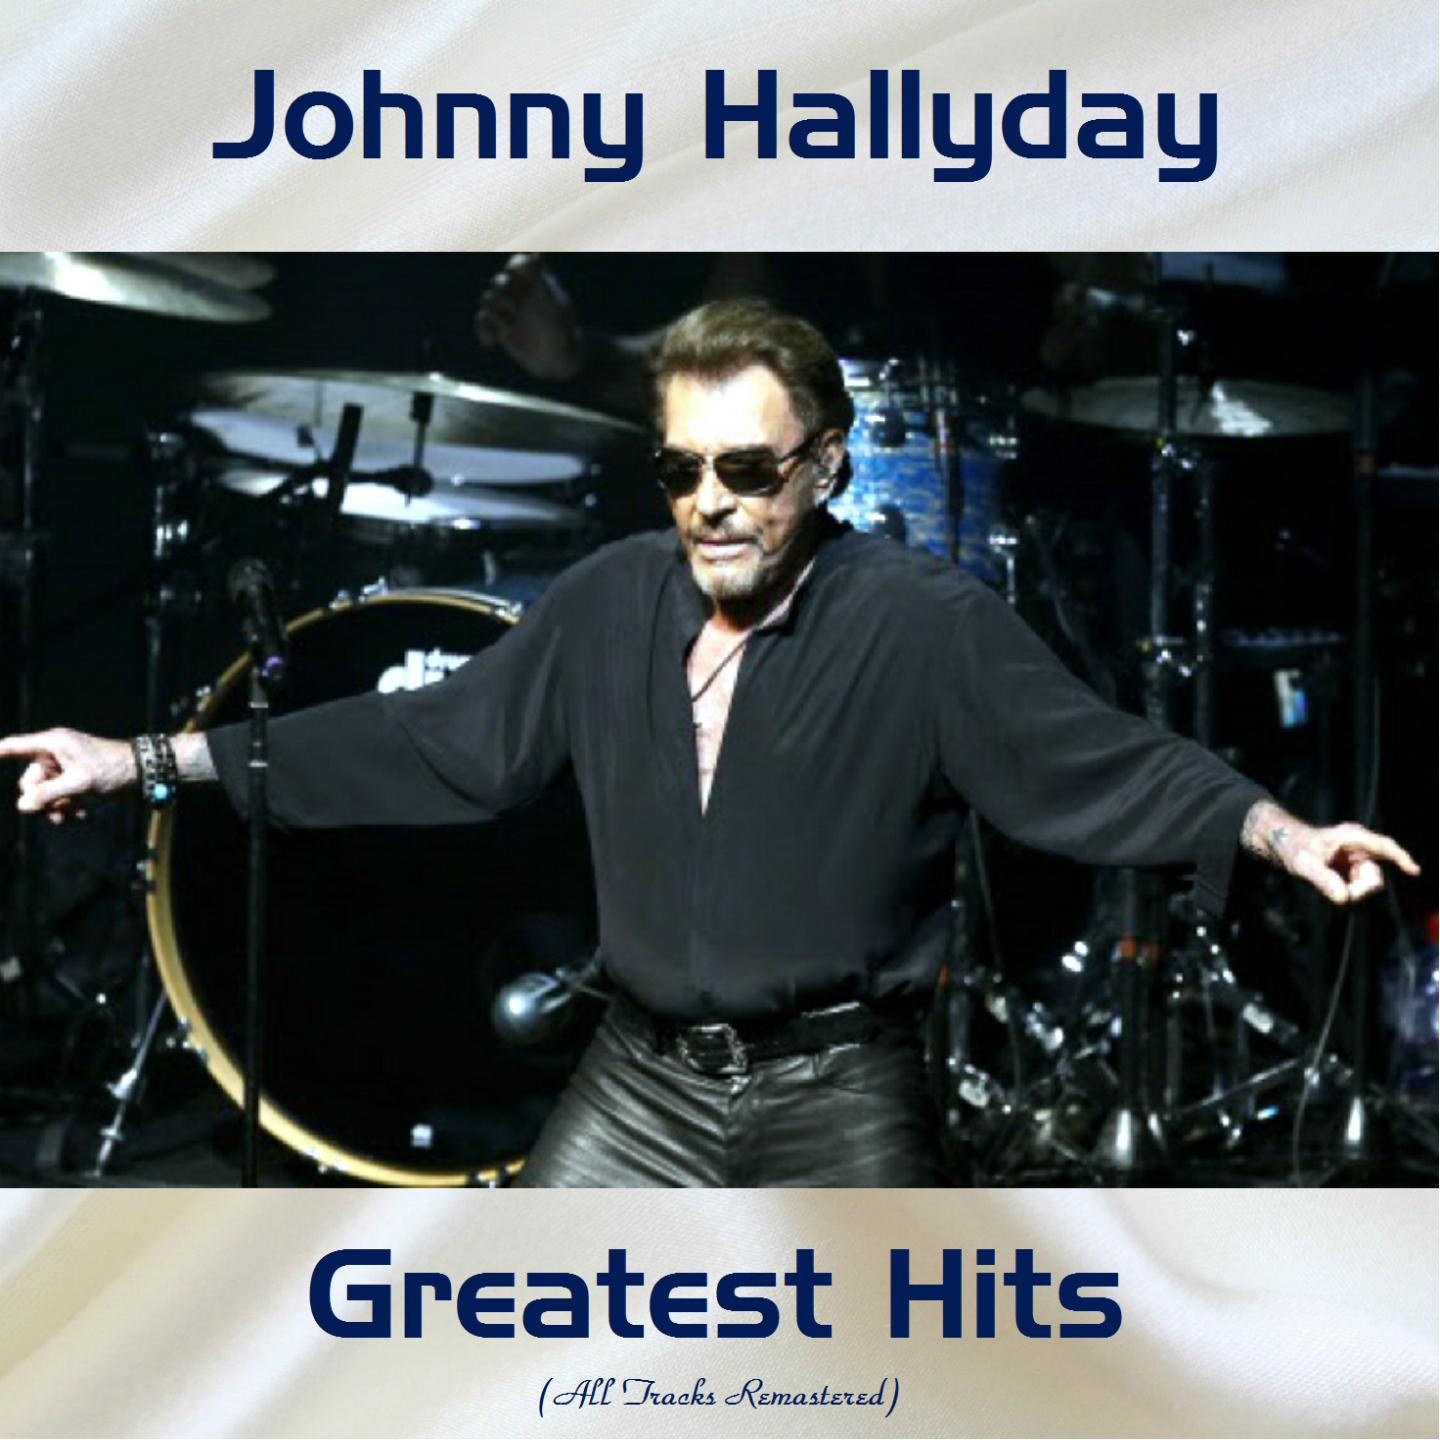 Johnny Hallyday Greatest Hits (All Tracks Remastered)